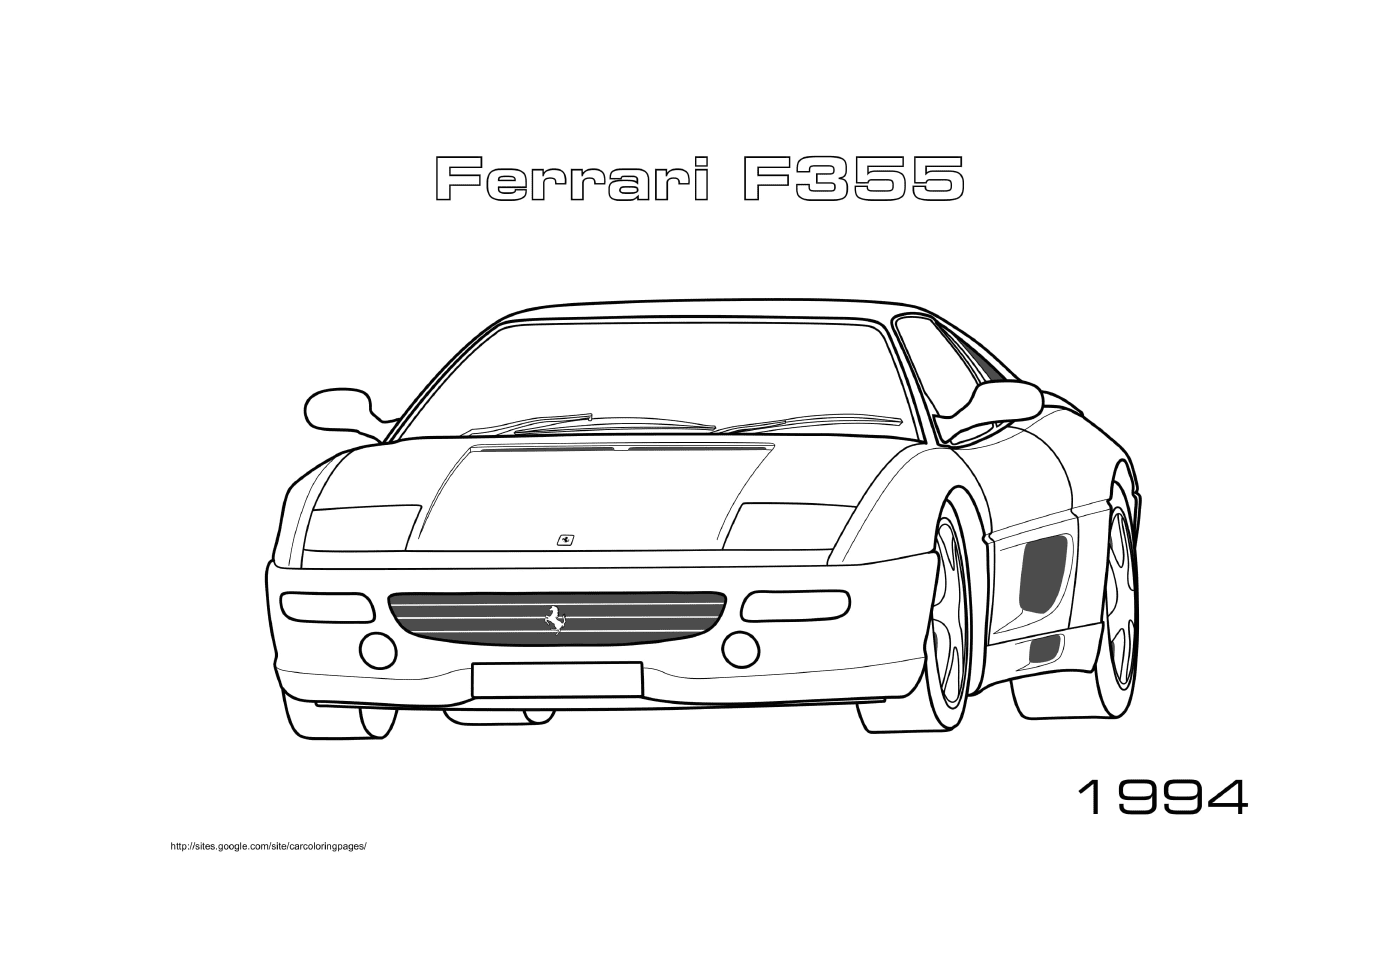  Ferrari Auto F355 1994 